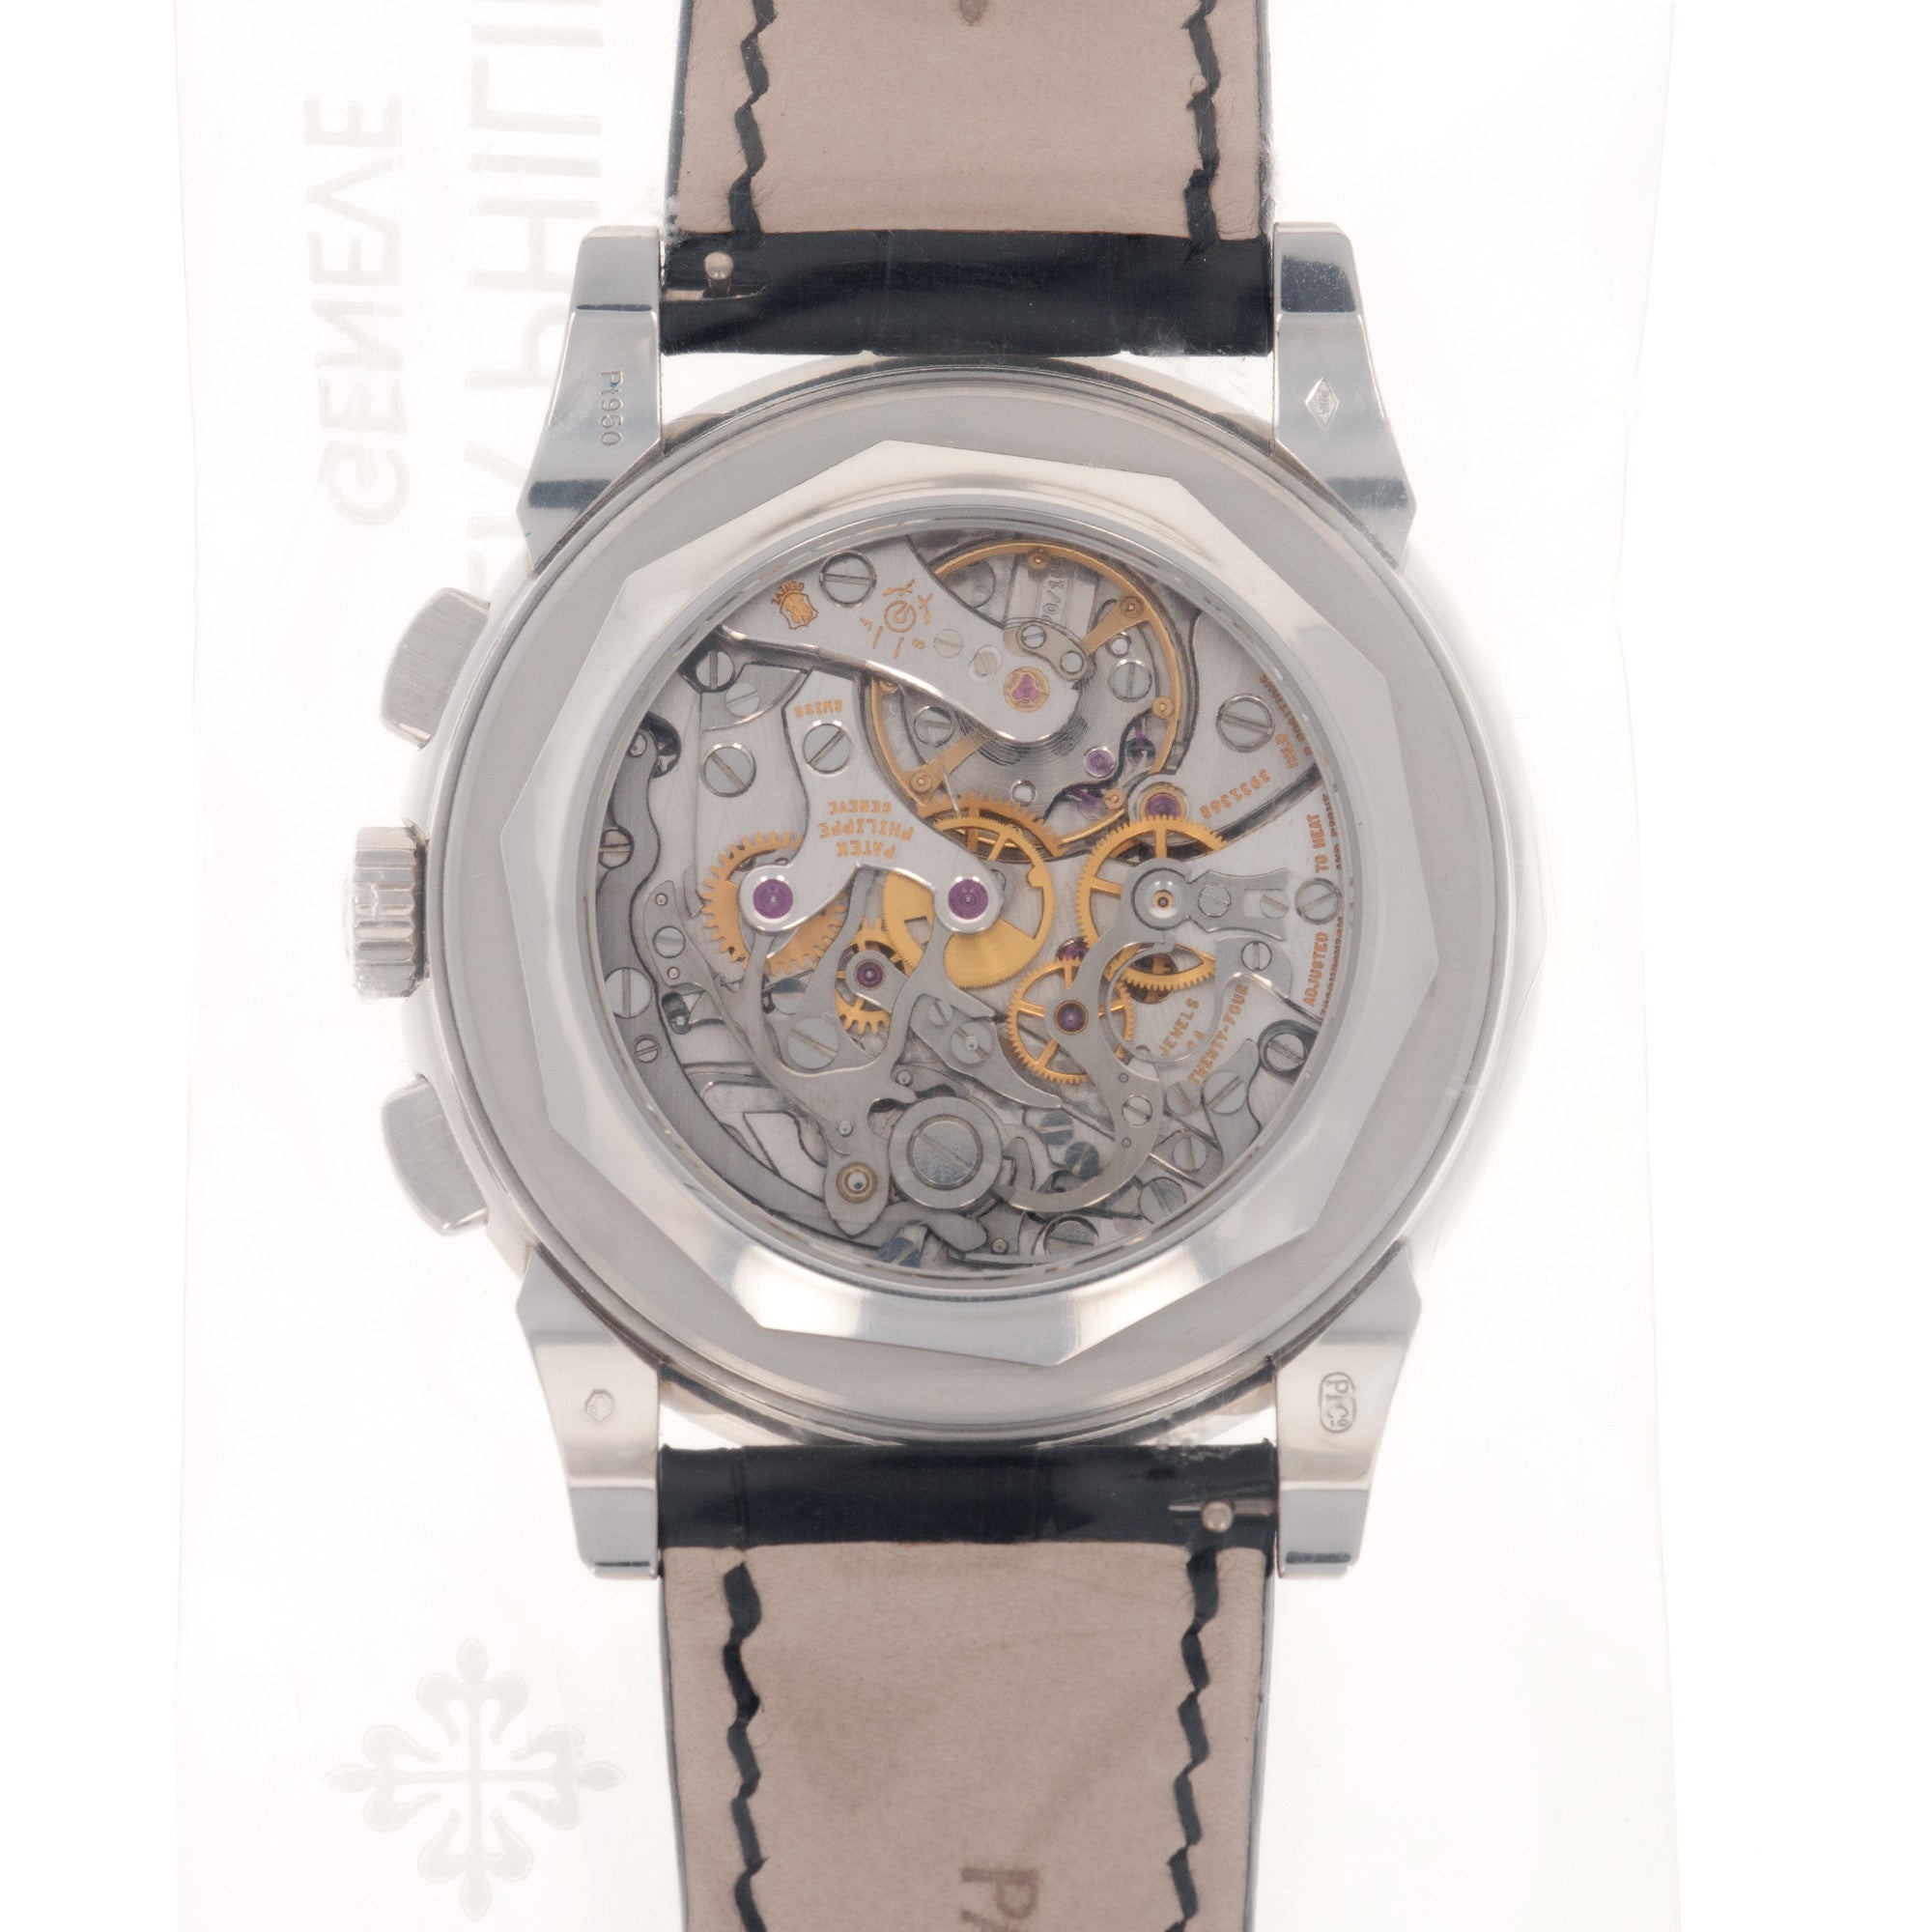 Patek Philippe - Patek Philippe Platinum Perpetual Calendar Chronograph Watch Ref. 5970 Unworn and in Original Seal - The Keystone Watches